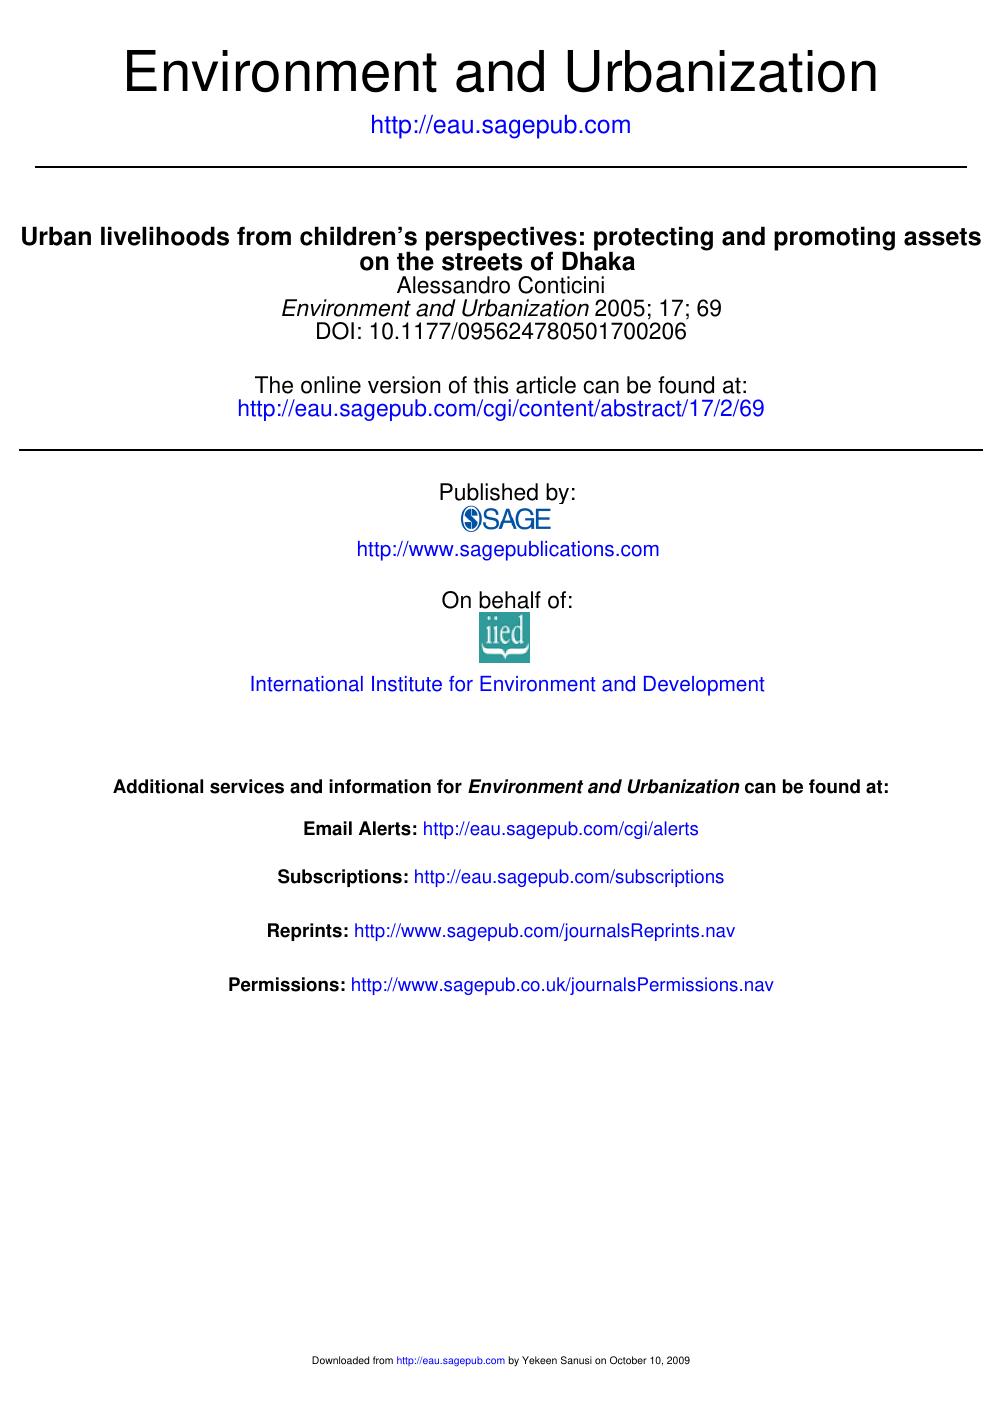 Urban livelihoods from children’s perspectives. 2005